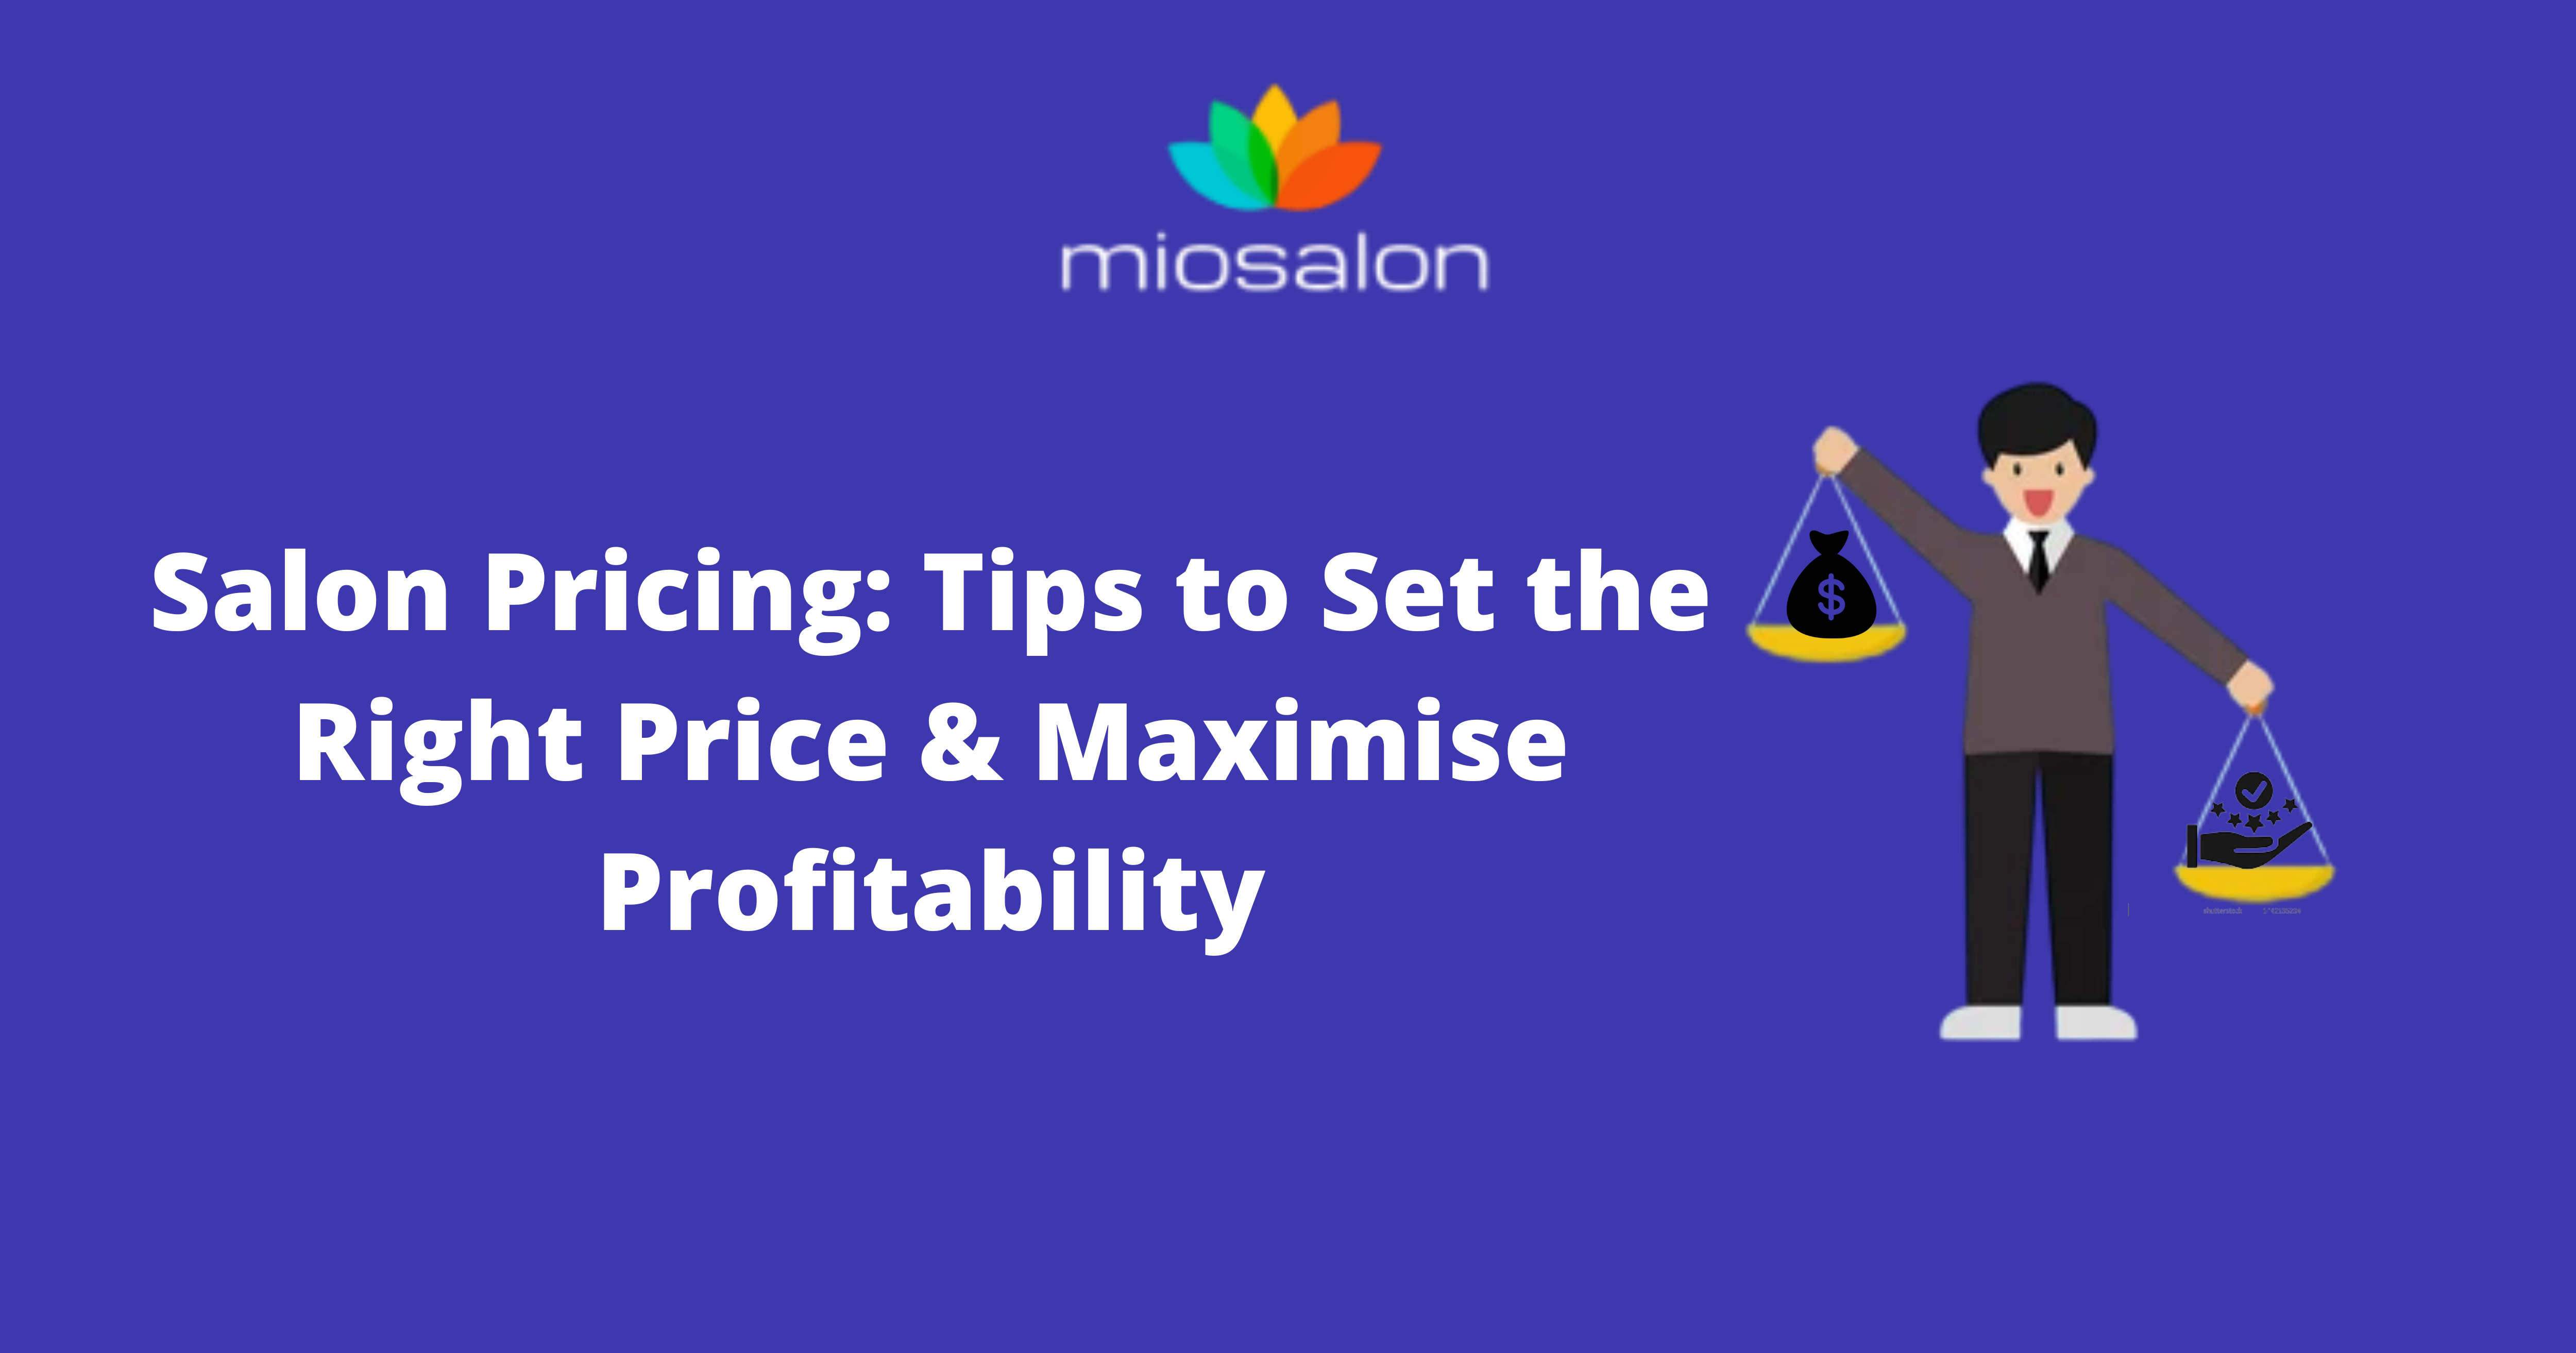 Tips to Set the Right Price & Maximise Profitability